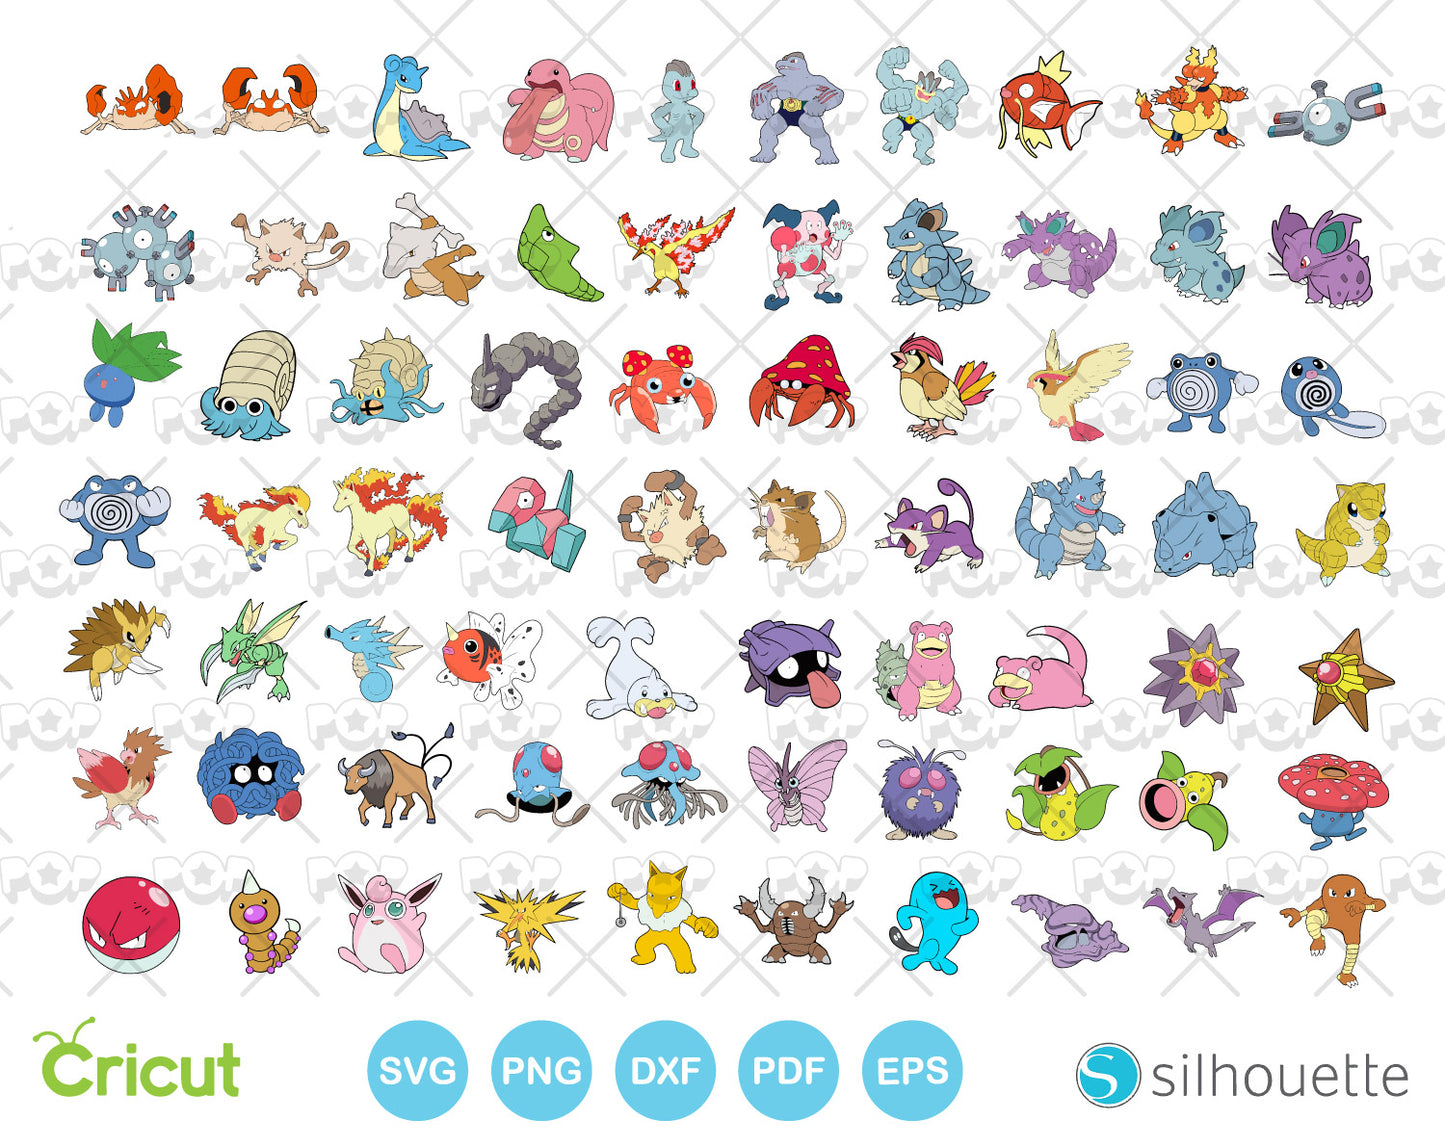 Pokemon 150 cliparts bundle, SVG cut files for Cricut / Silhouette, PNG, DXF, instant download